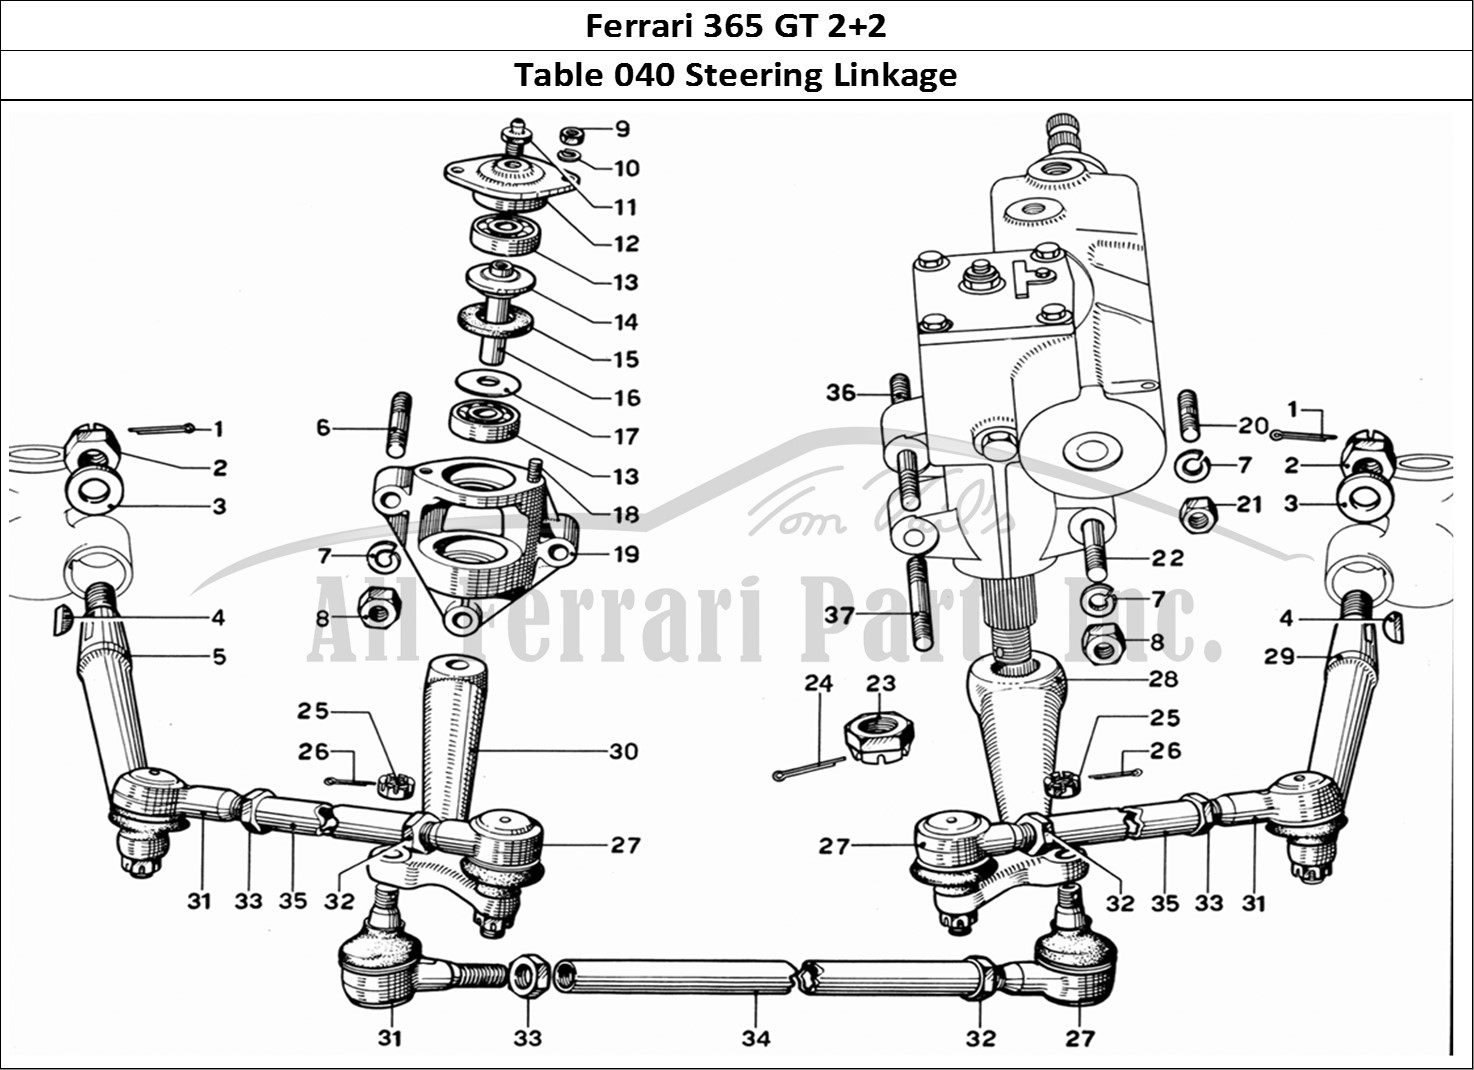 Ferrari Parts Ferrari 365 GT 2+2 (Mechanical) Page 040 Steering Linkage